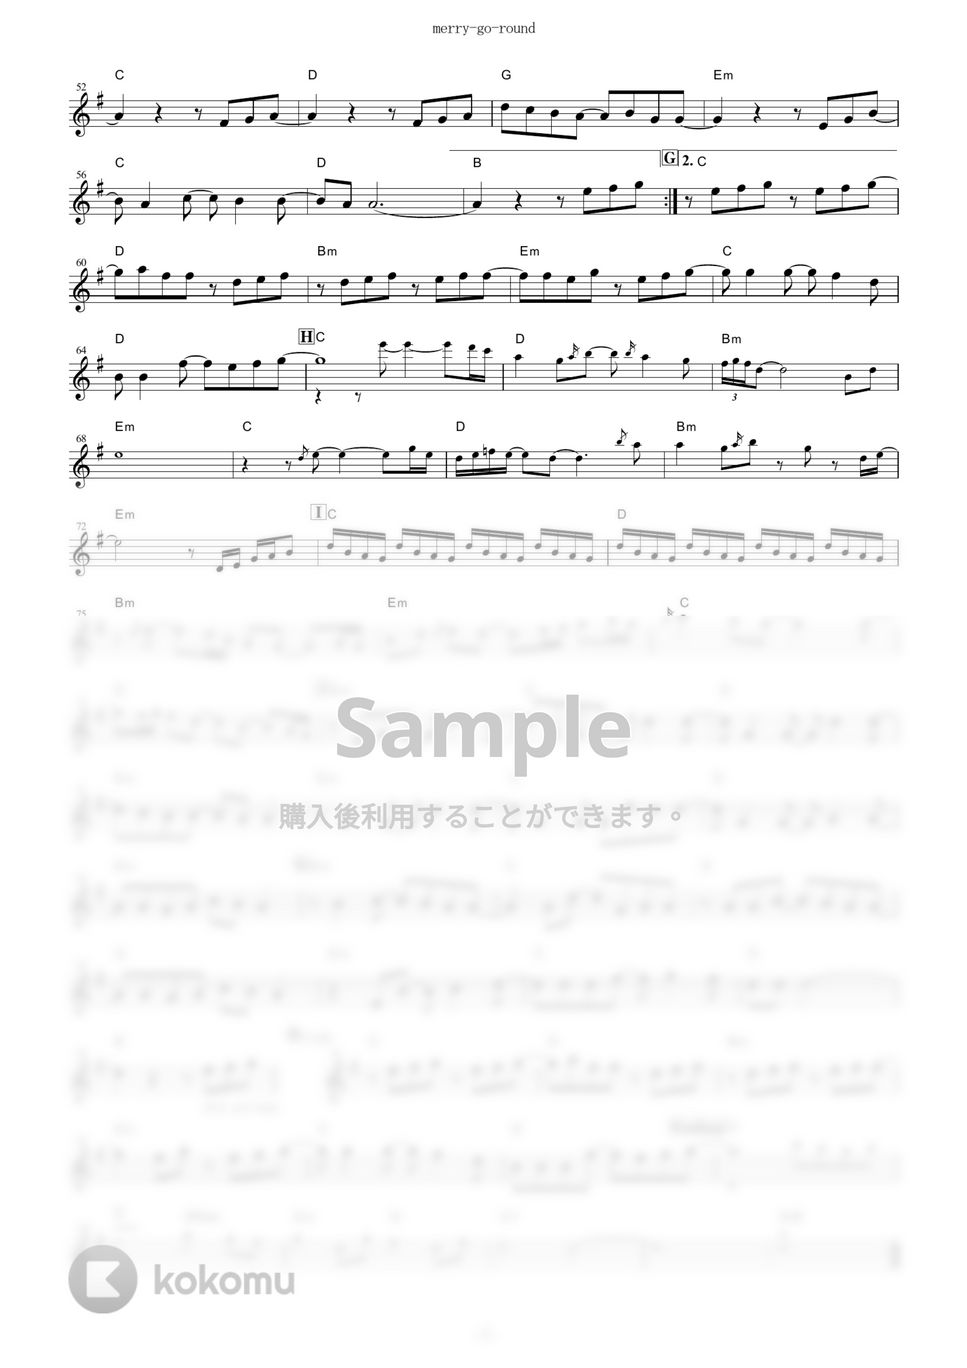 CHEMISTRY - merry-go-round (『機動戦士ガンダムUC』 / in C) by muta-sax